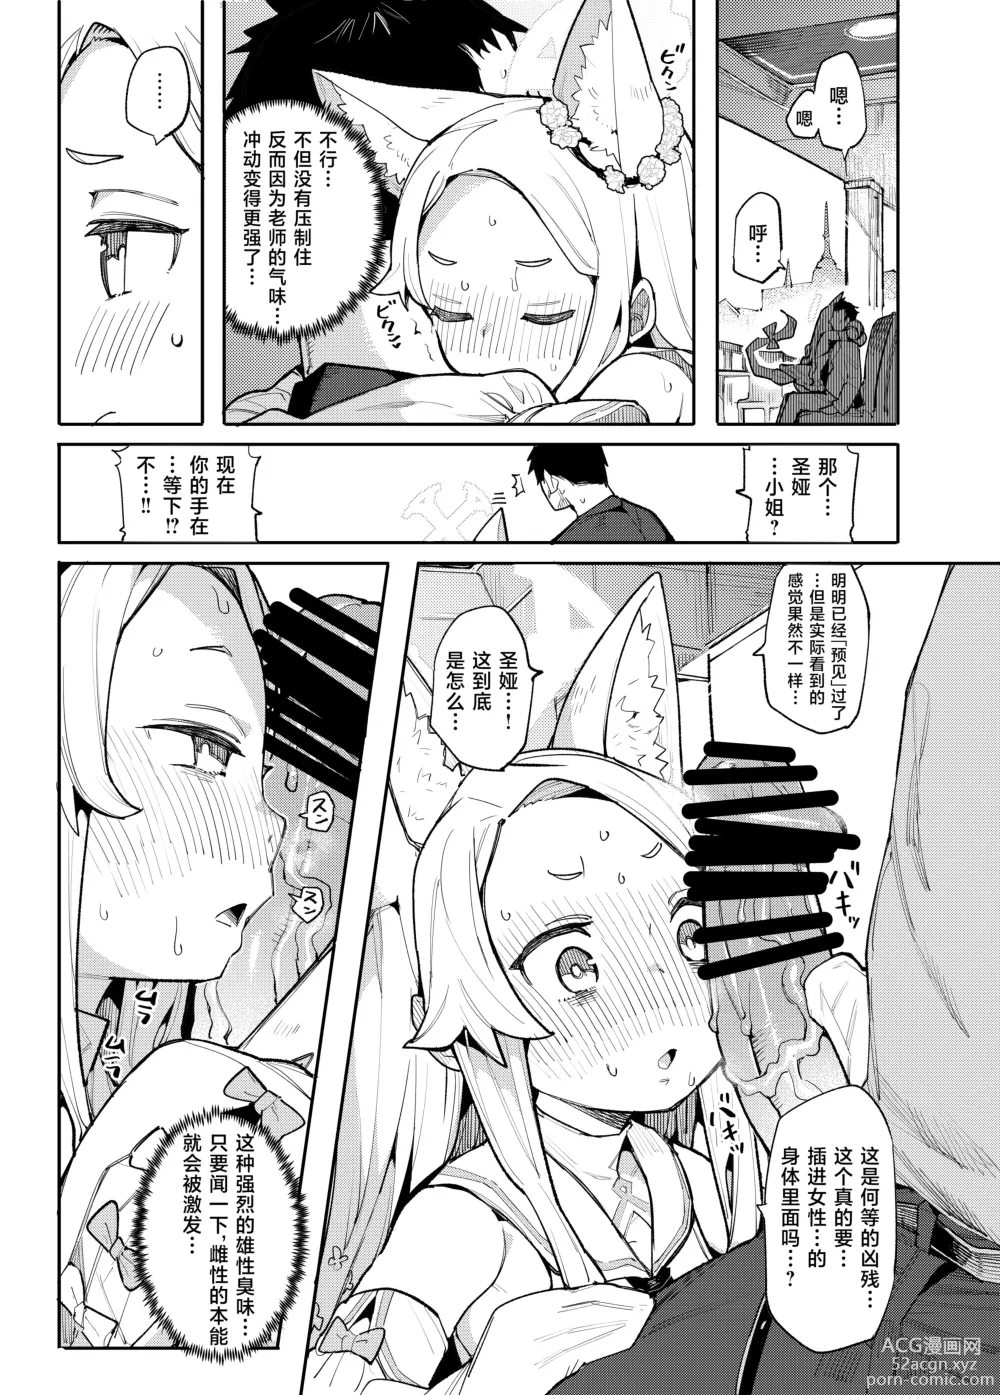 Page 6 of doujinshi 雌性狐狸看到了充满色情的未来